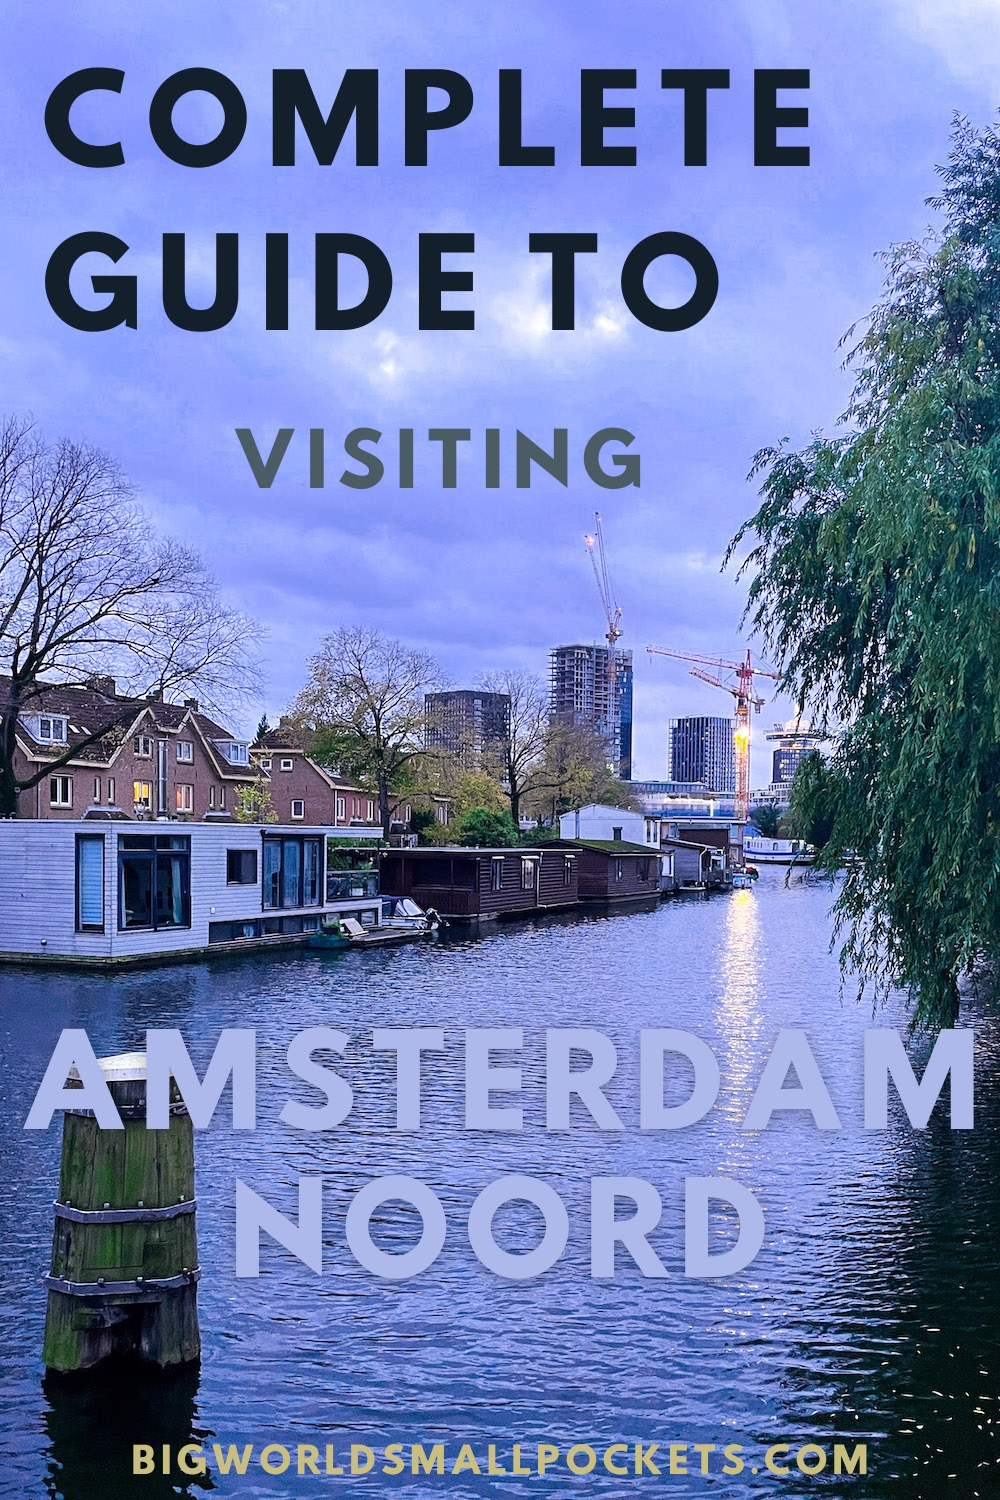 Travel Guide to Ijmuiden & Zandvoort on the Amsterdam Coast